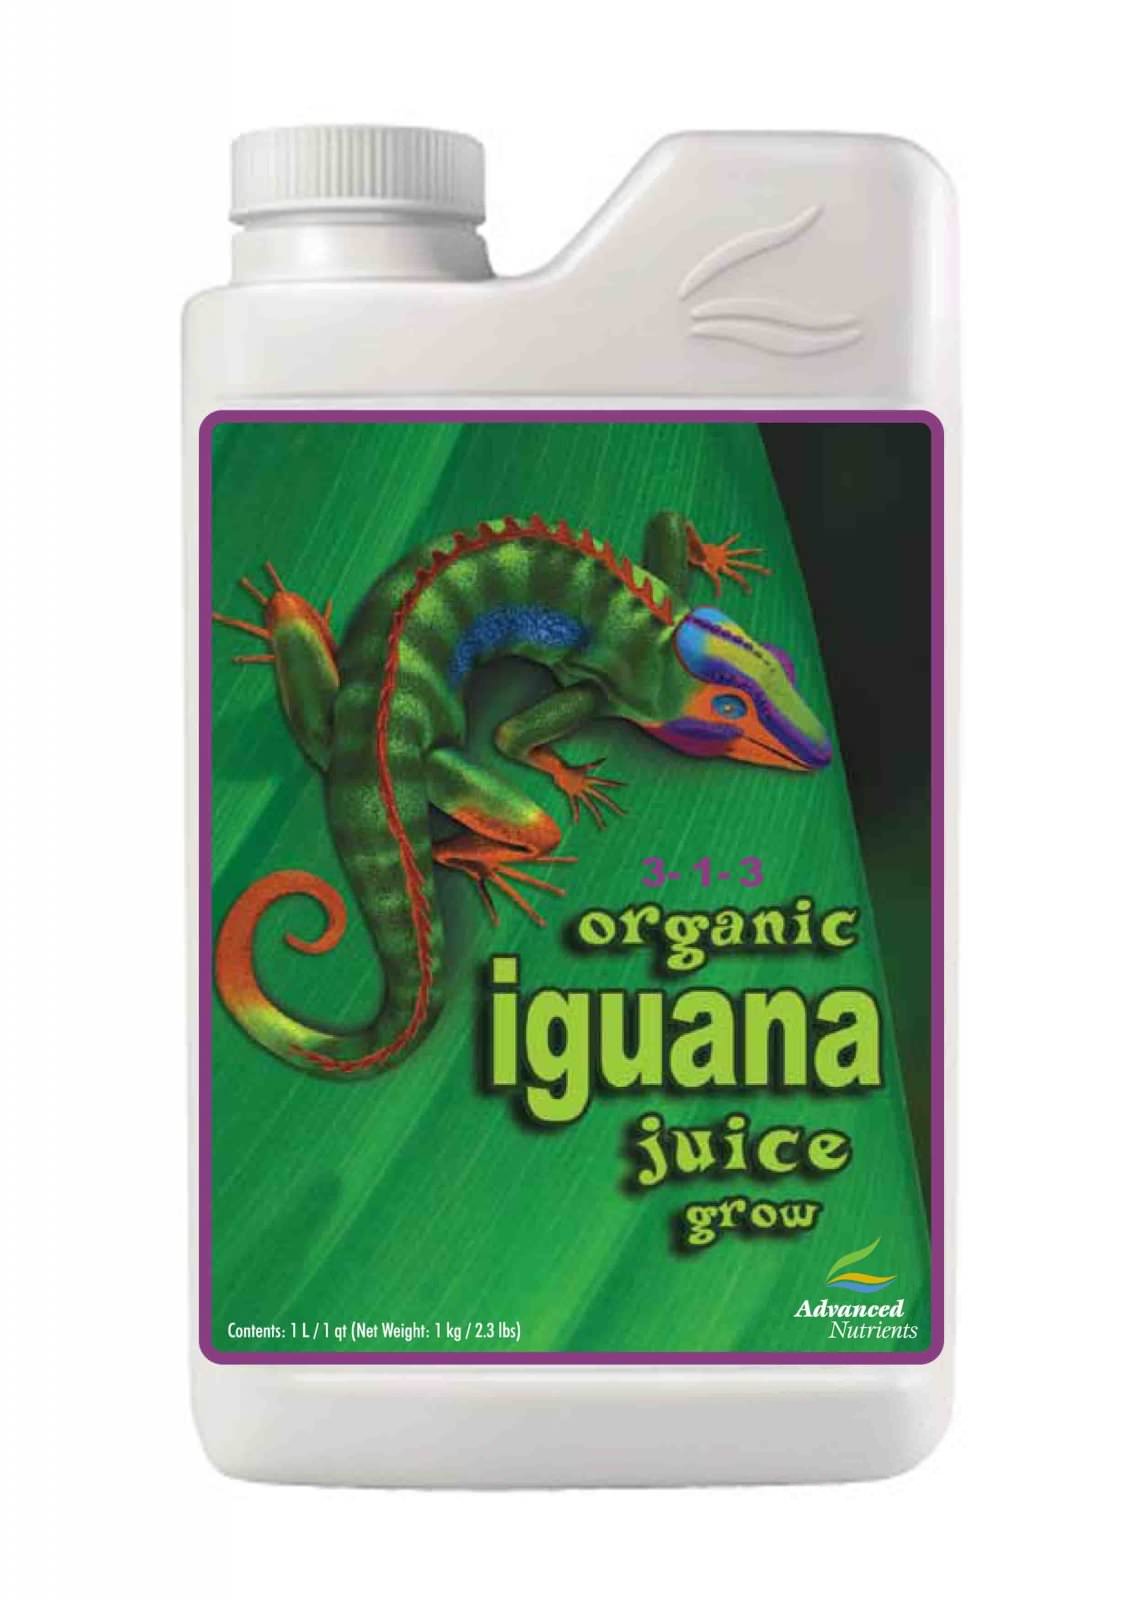 iguana-juice-grow-1309436686